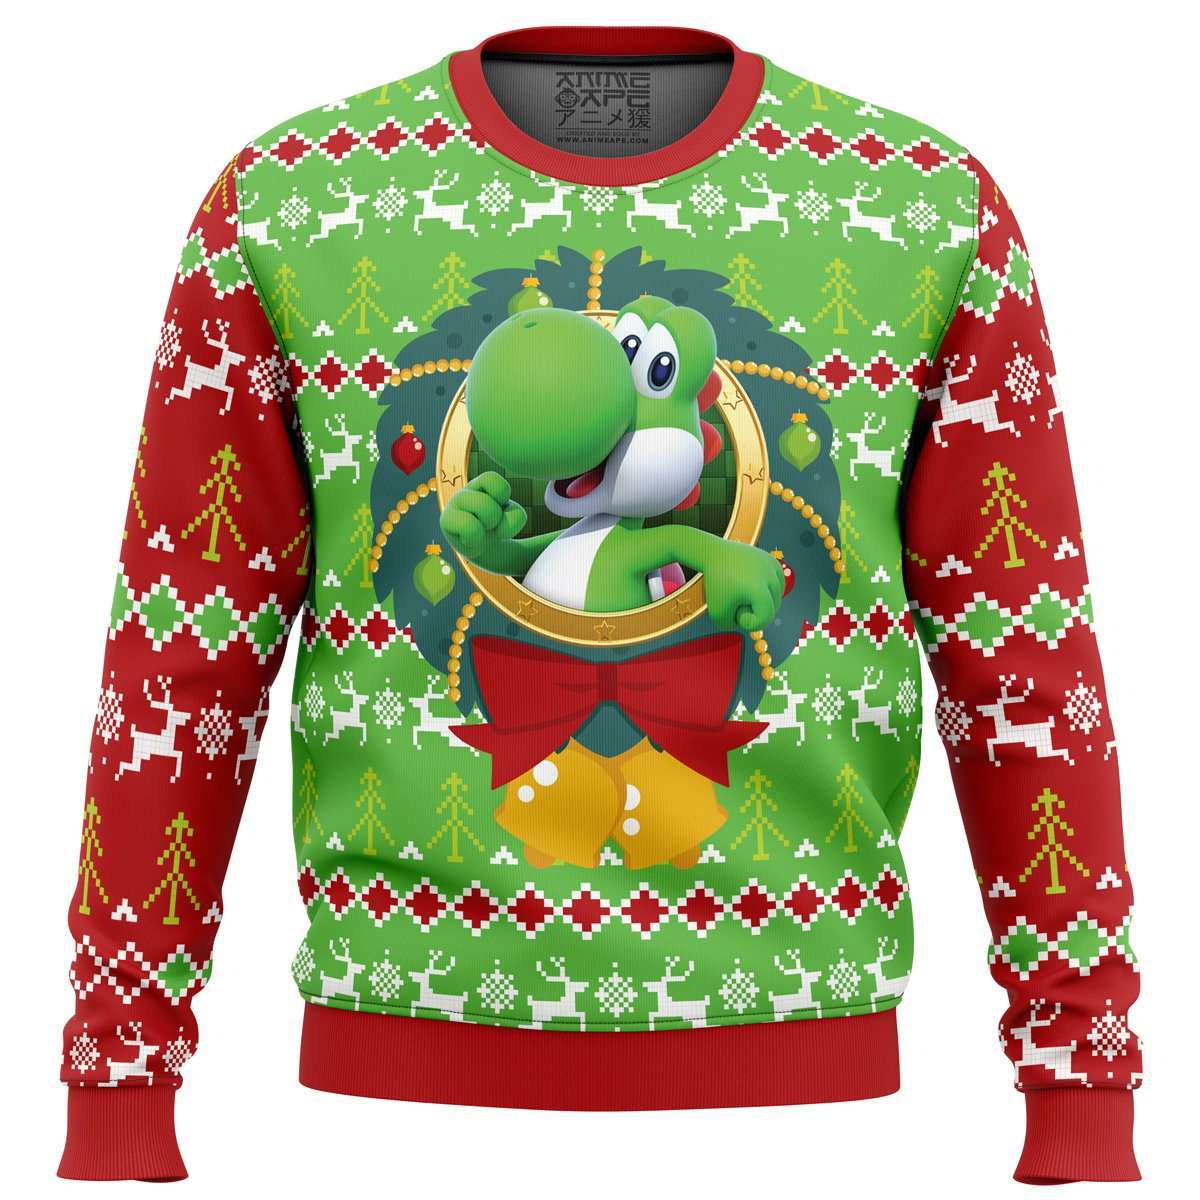 Yoshi Super Mario Ugly Christmas Sweater